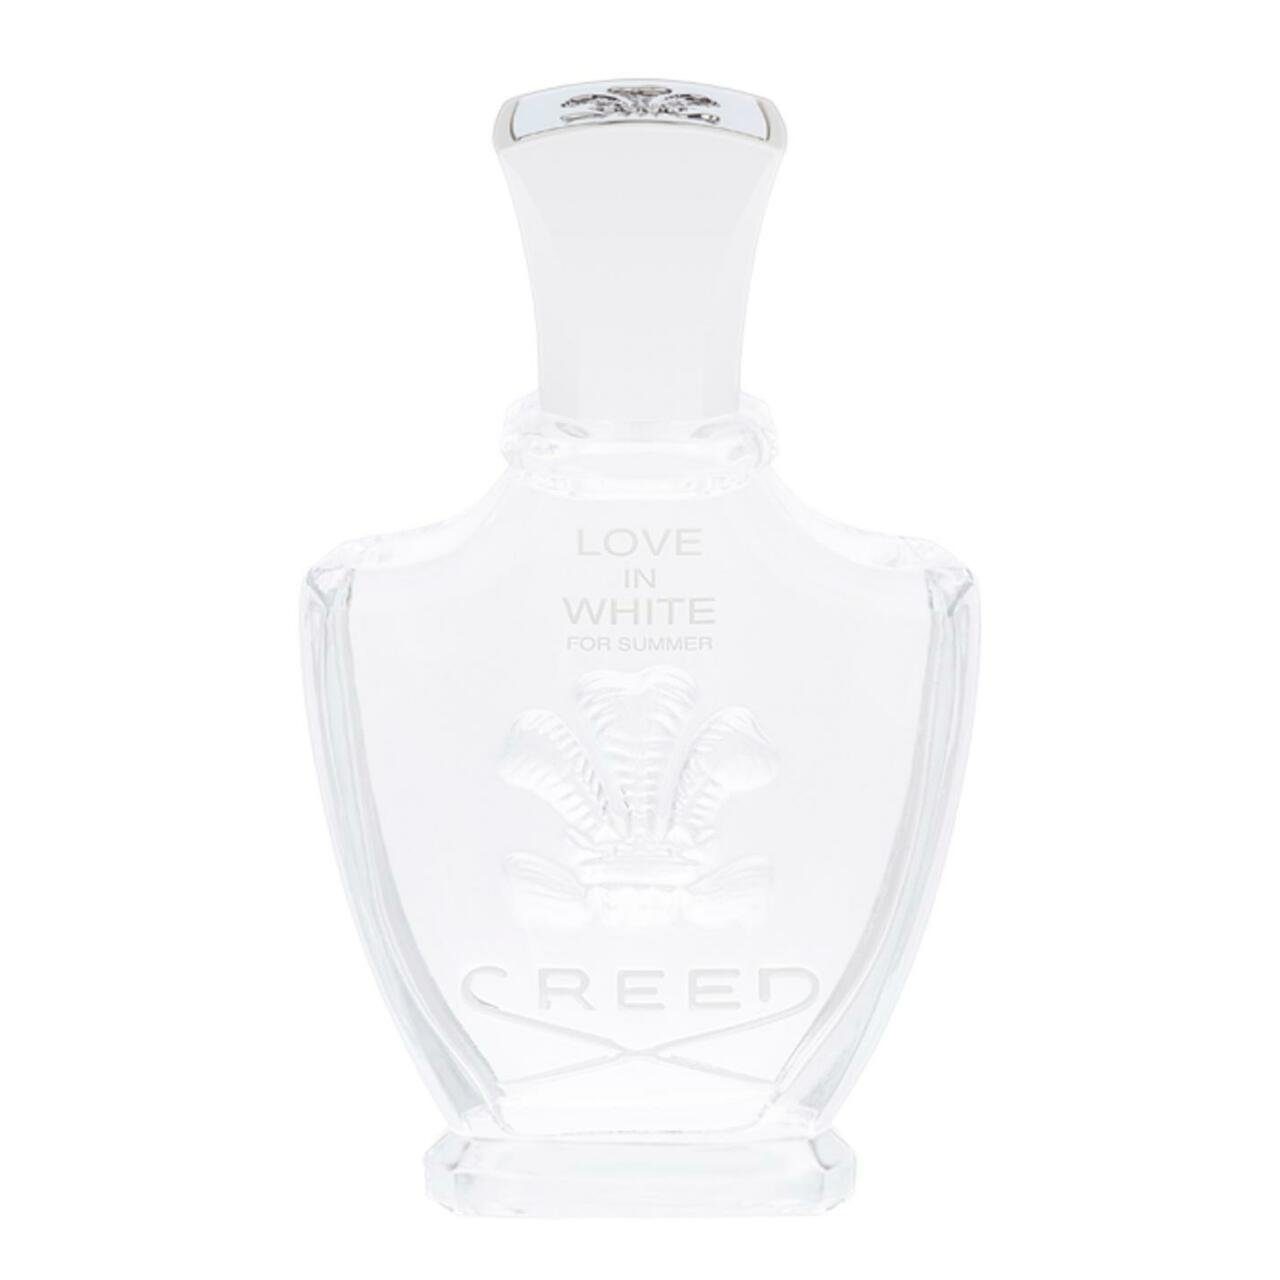 Creed Eau de Parfum Love in White for Summer E.d.P. Nat. Spray